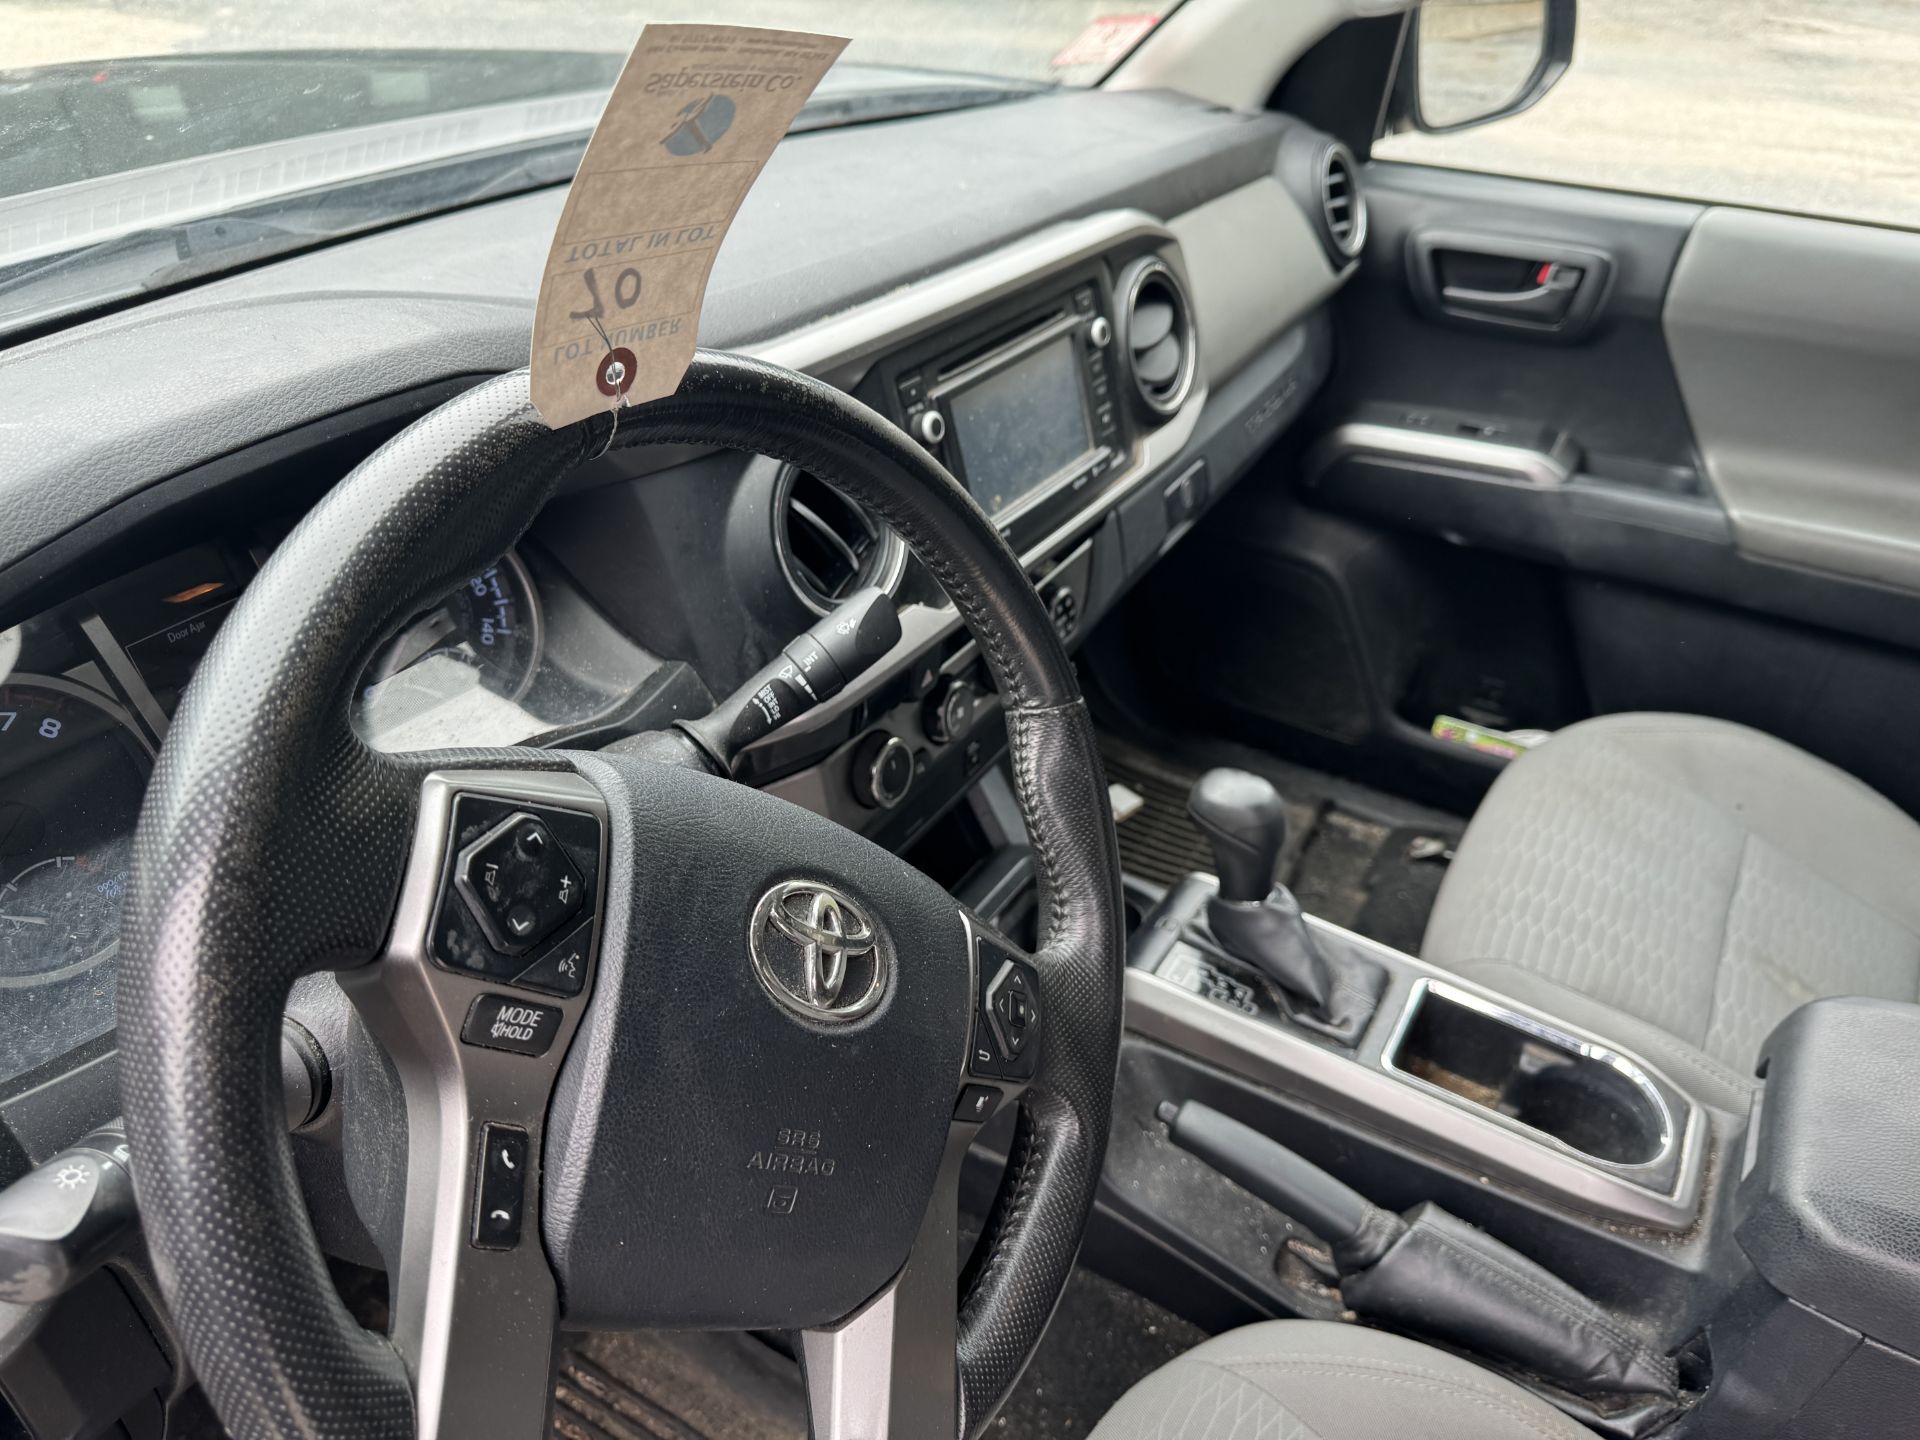 2017 Toyota Tacoma SR5 Half Cab. Odom: 72,062 (READING) 6' Bed, V/N: 5TFSZ5AN8HX083055 - Image 6 of 7